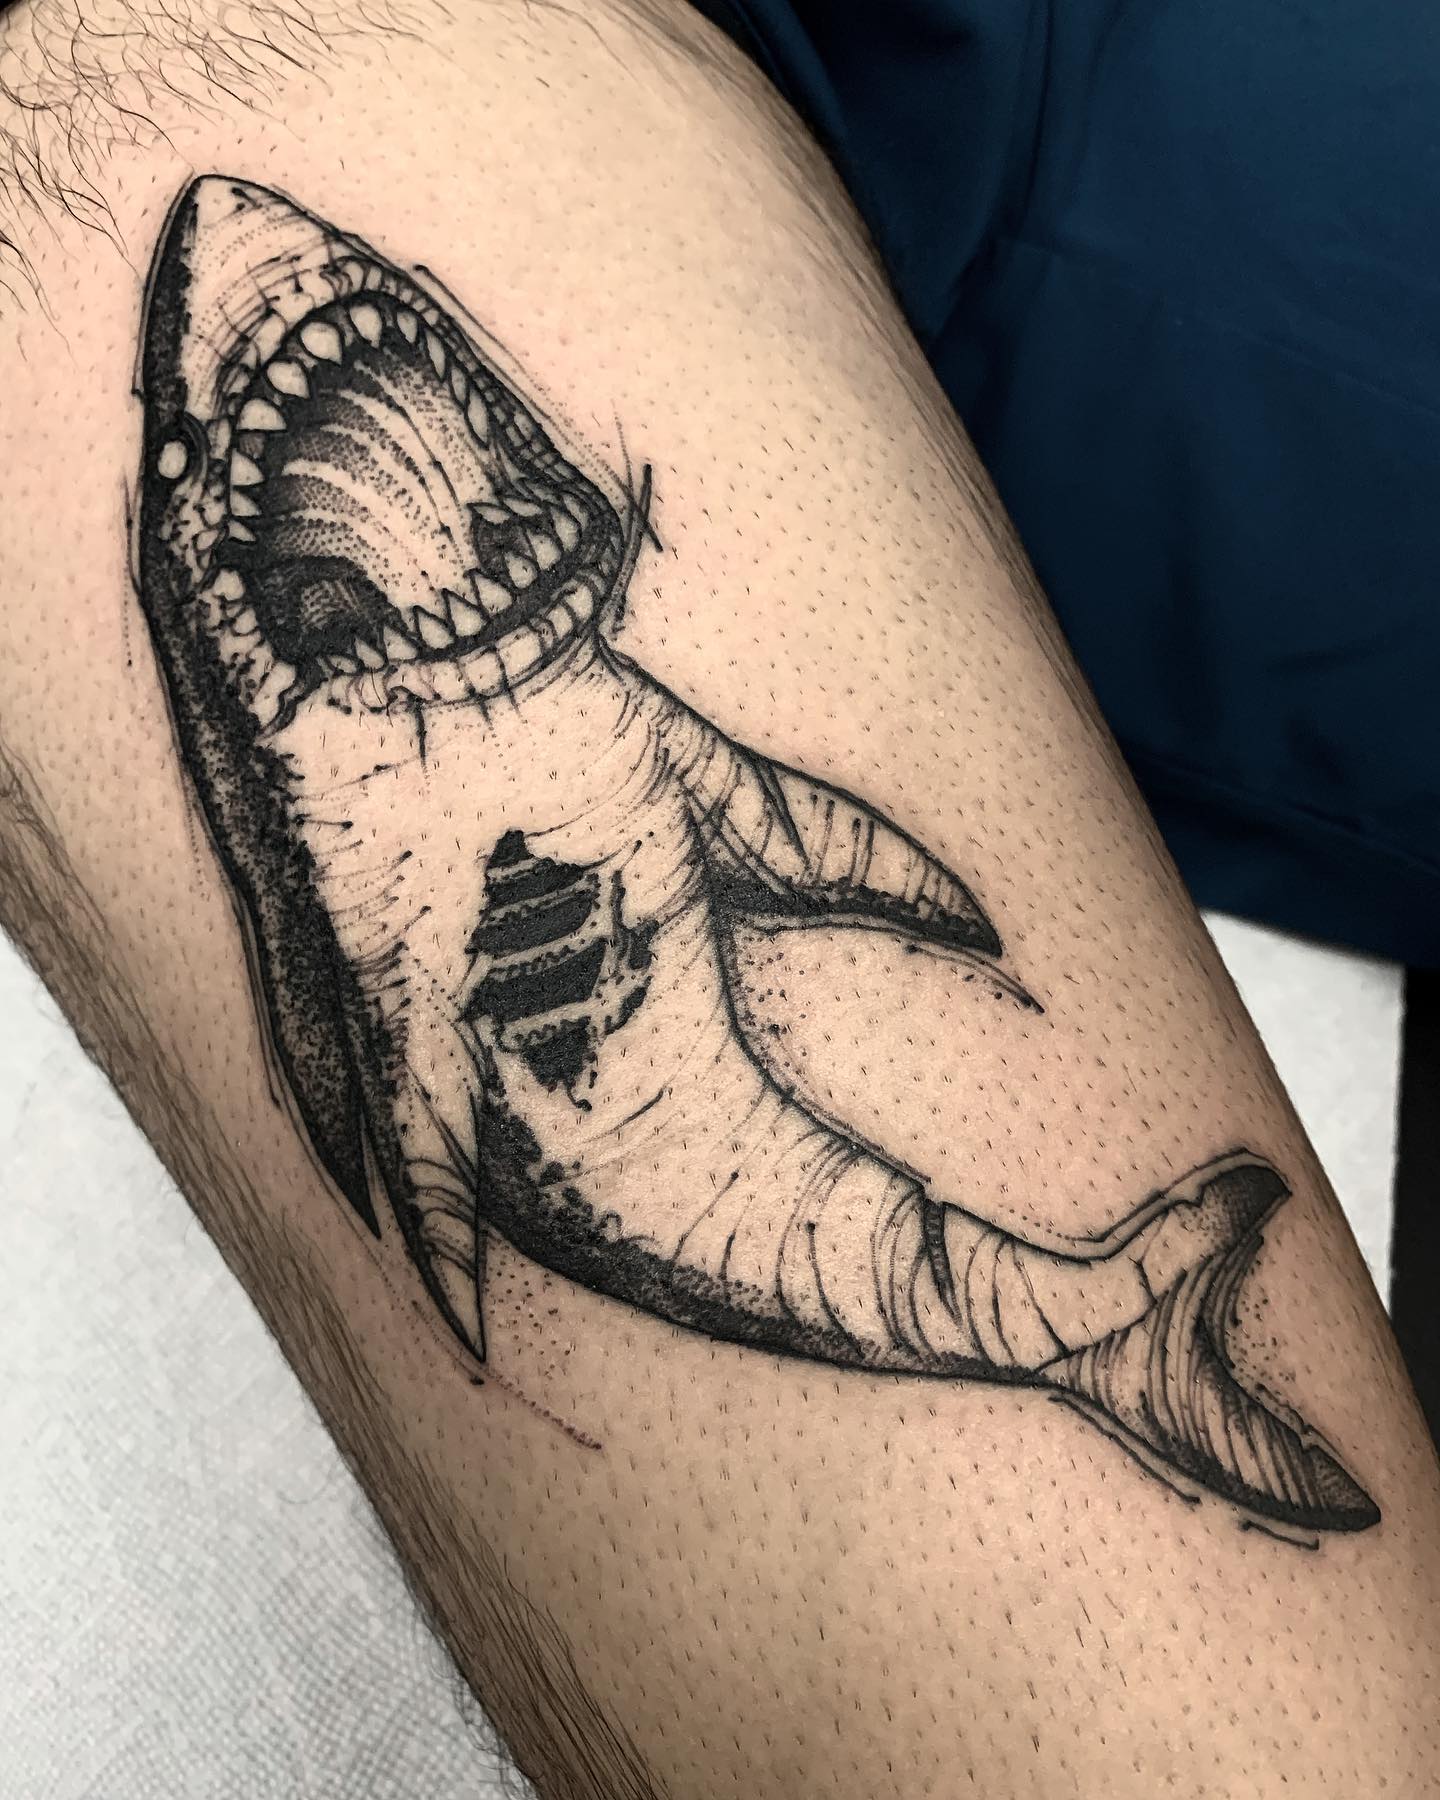 Tatuaje de tiburón pequeño